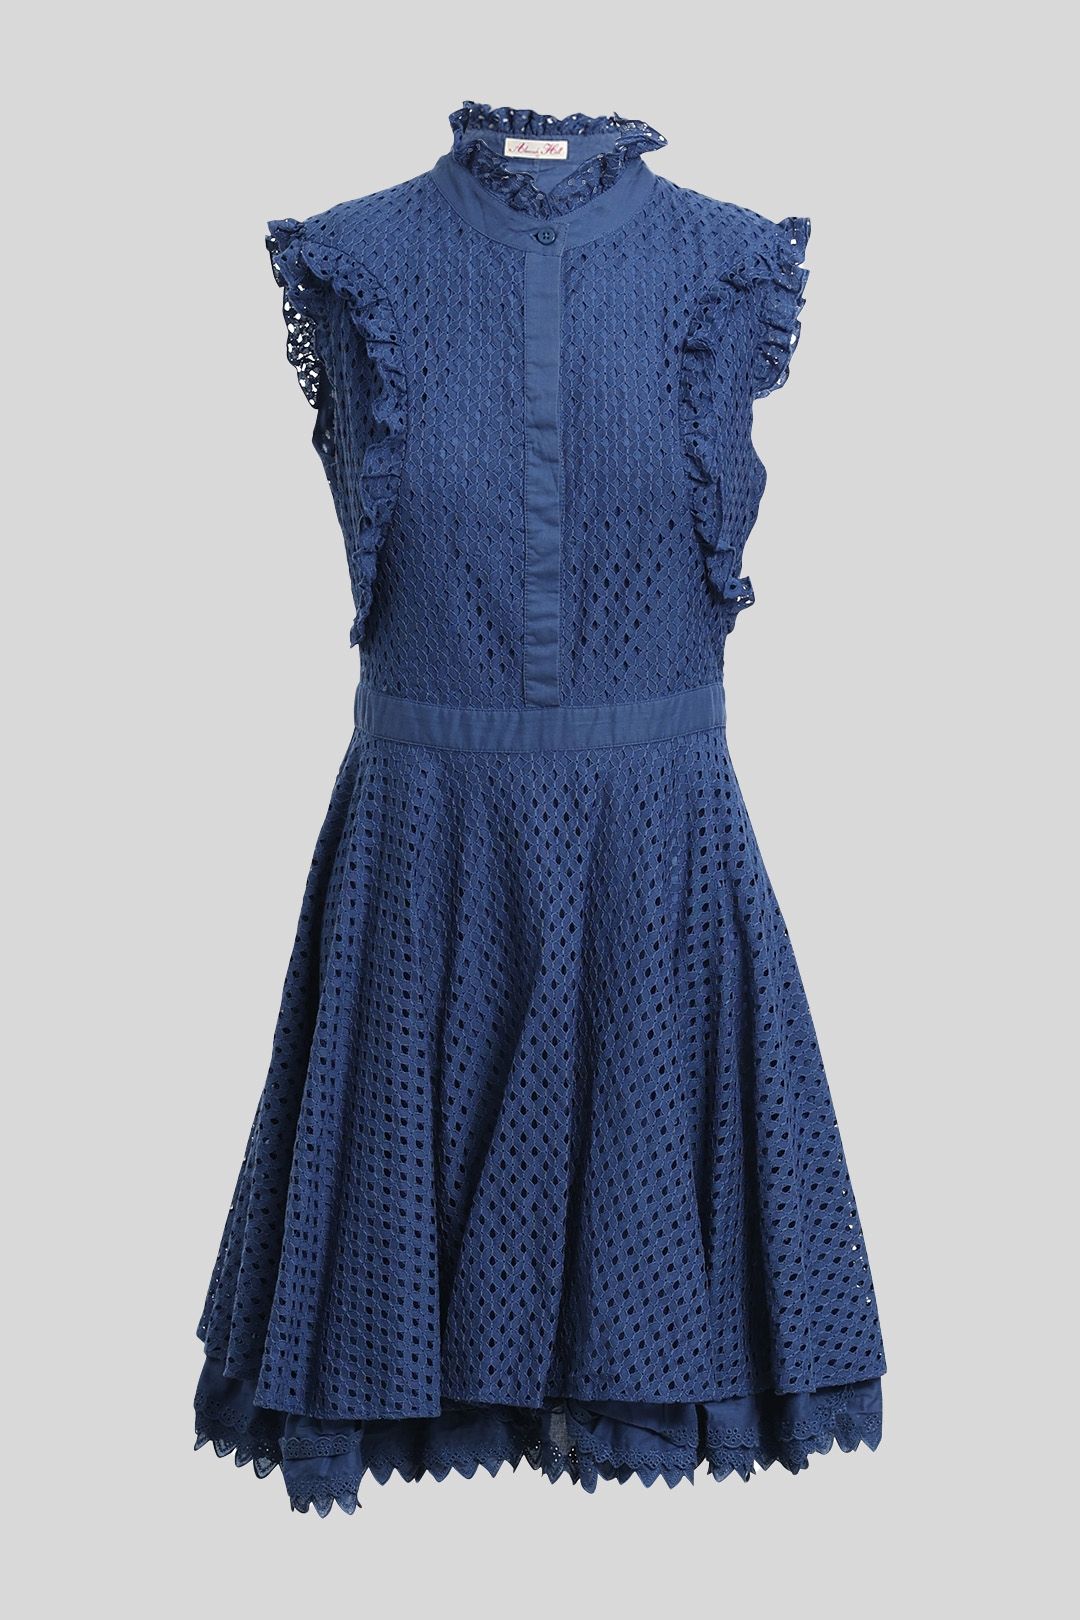 Alannah Hill - Blue Lace Diamond Pattern Dress